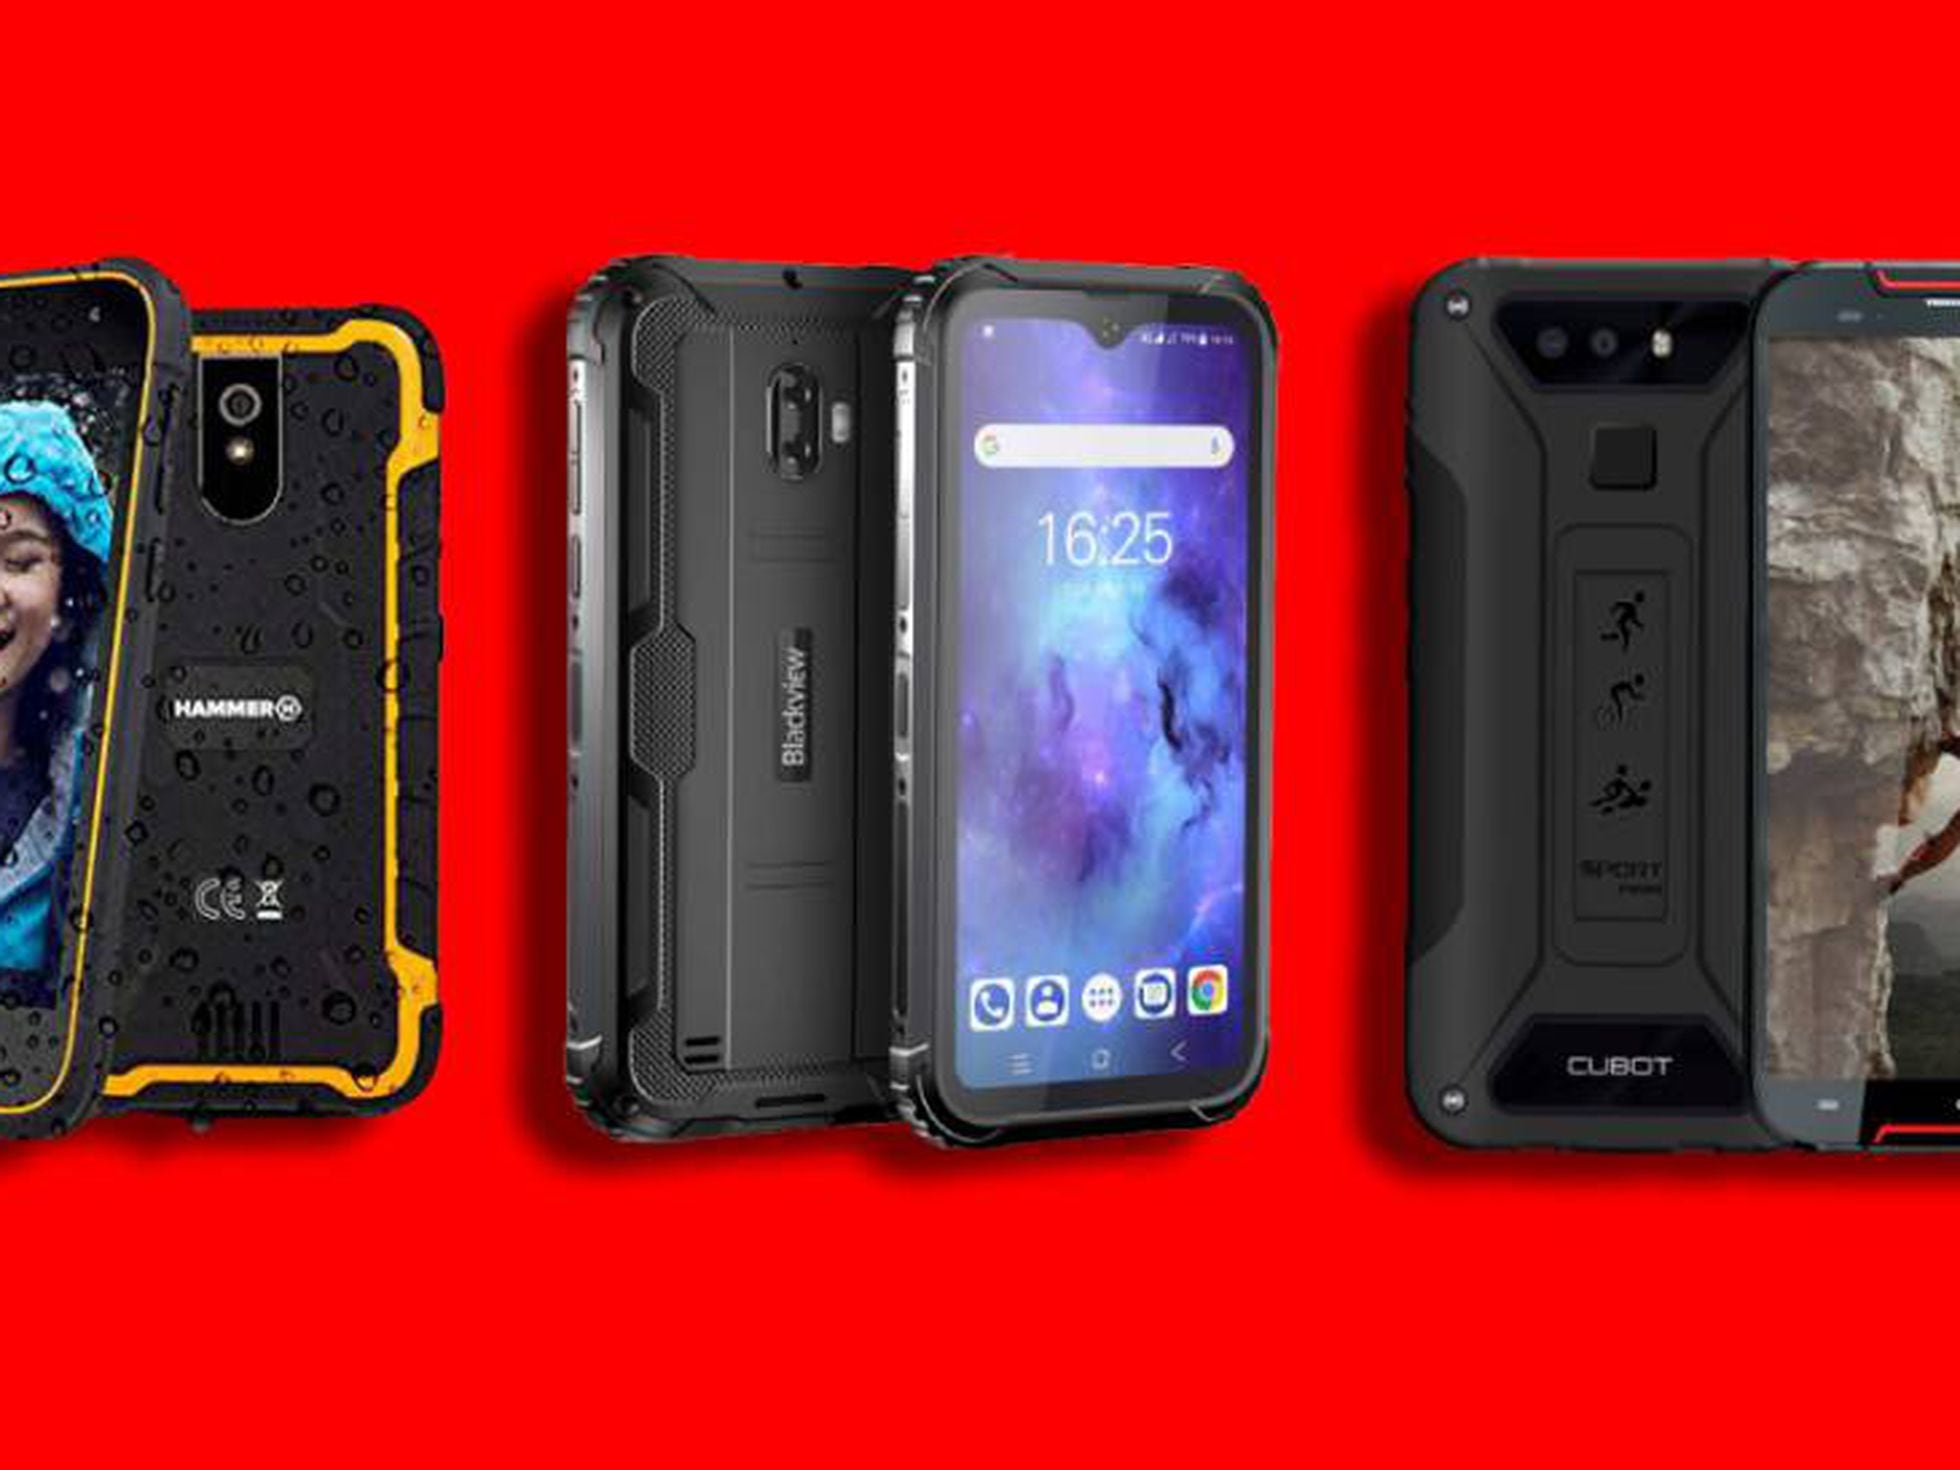 Teléfono móvil resistente al agua Android 12 de 6,5 pulgadas desbloqueado  Con NFC - China Teléfono móvil y teléfono móvil inteligente precio